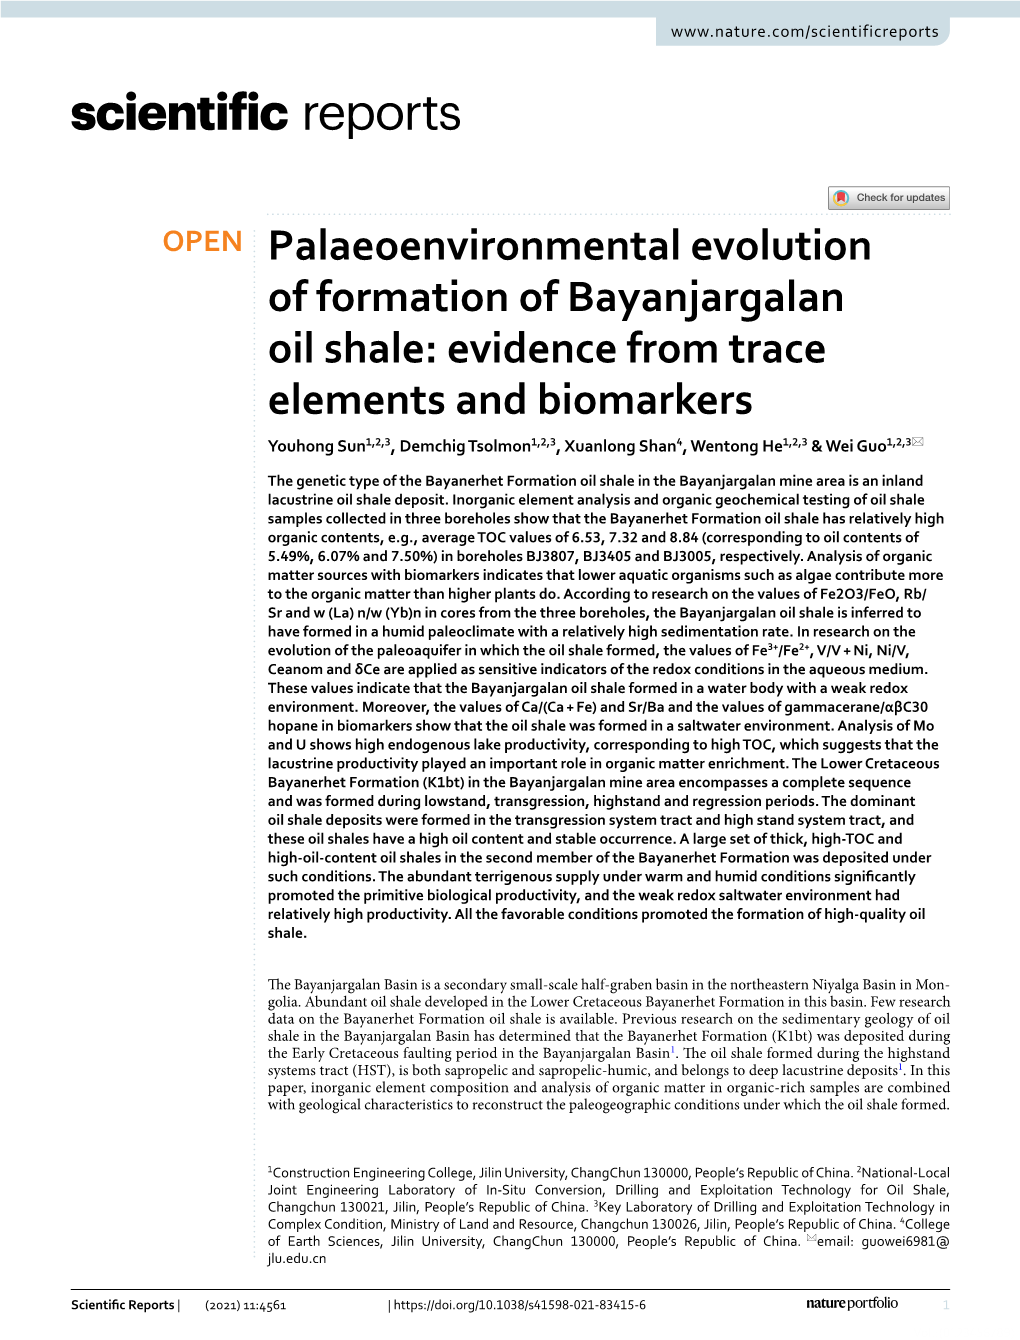 Palaeoenvironmental Evolution of Formation of Bayanjargalan Oil